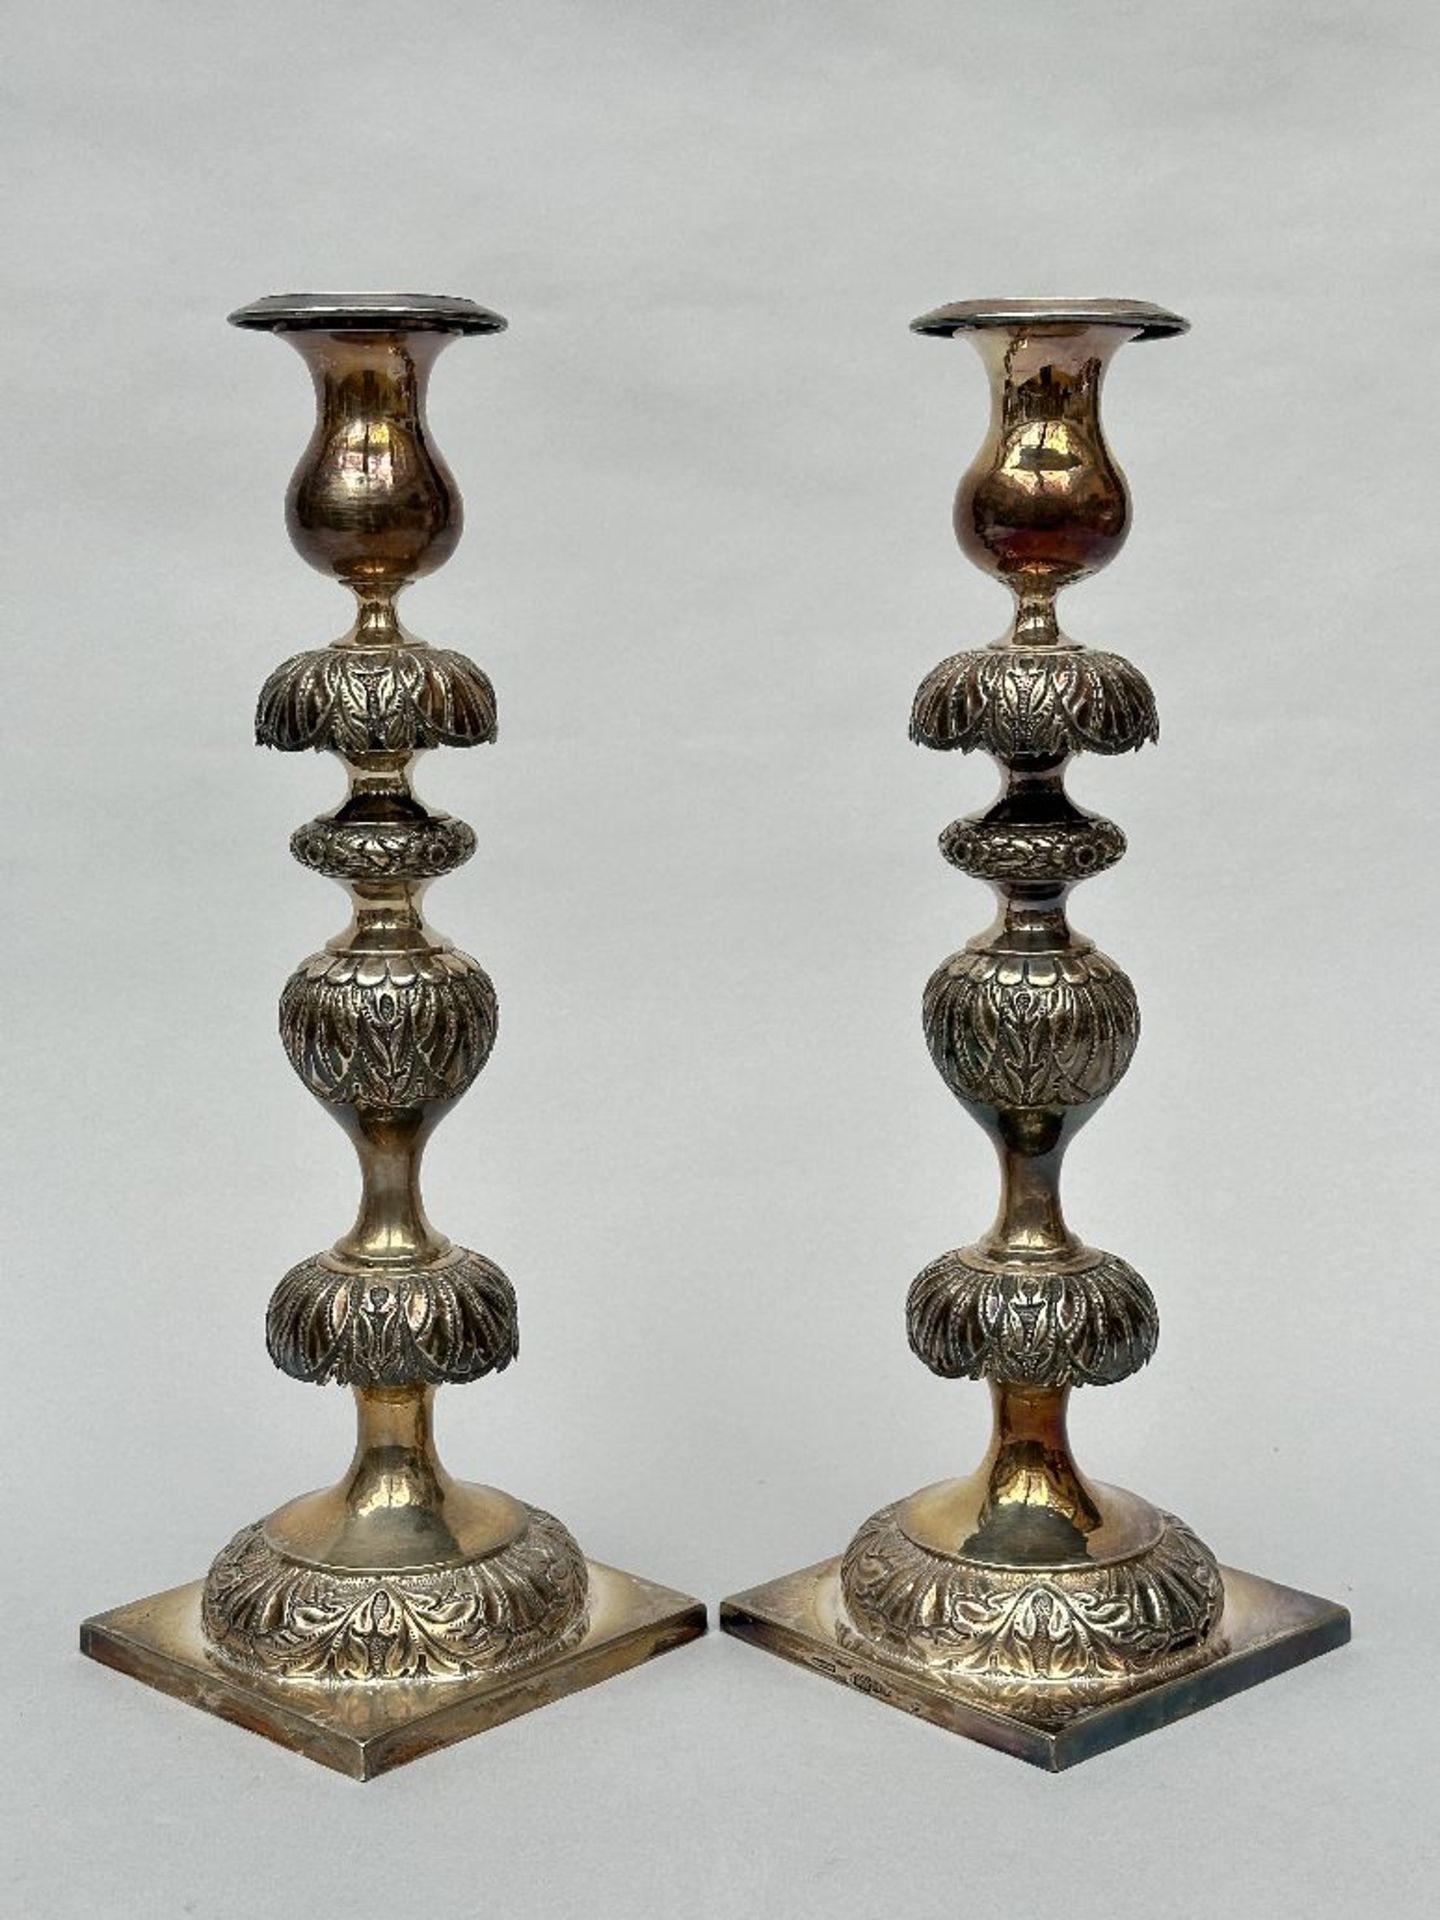 A pair of silver candlesticks by Jan Pogorzelski, 1863 - Image 2 of 4